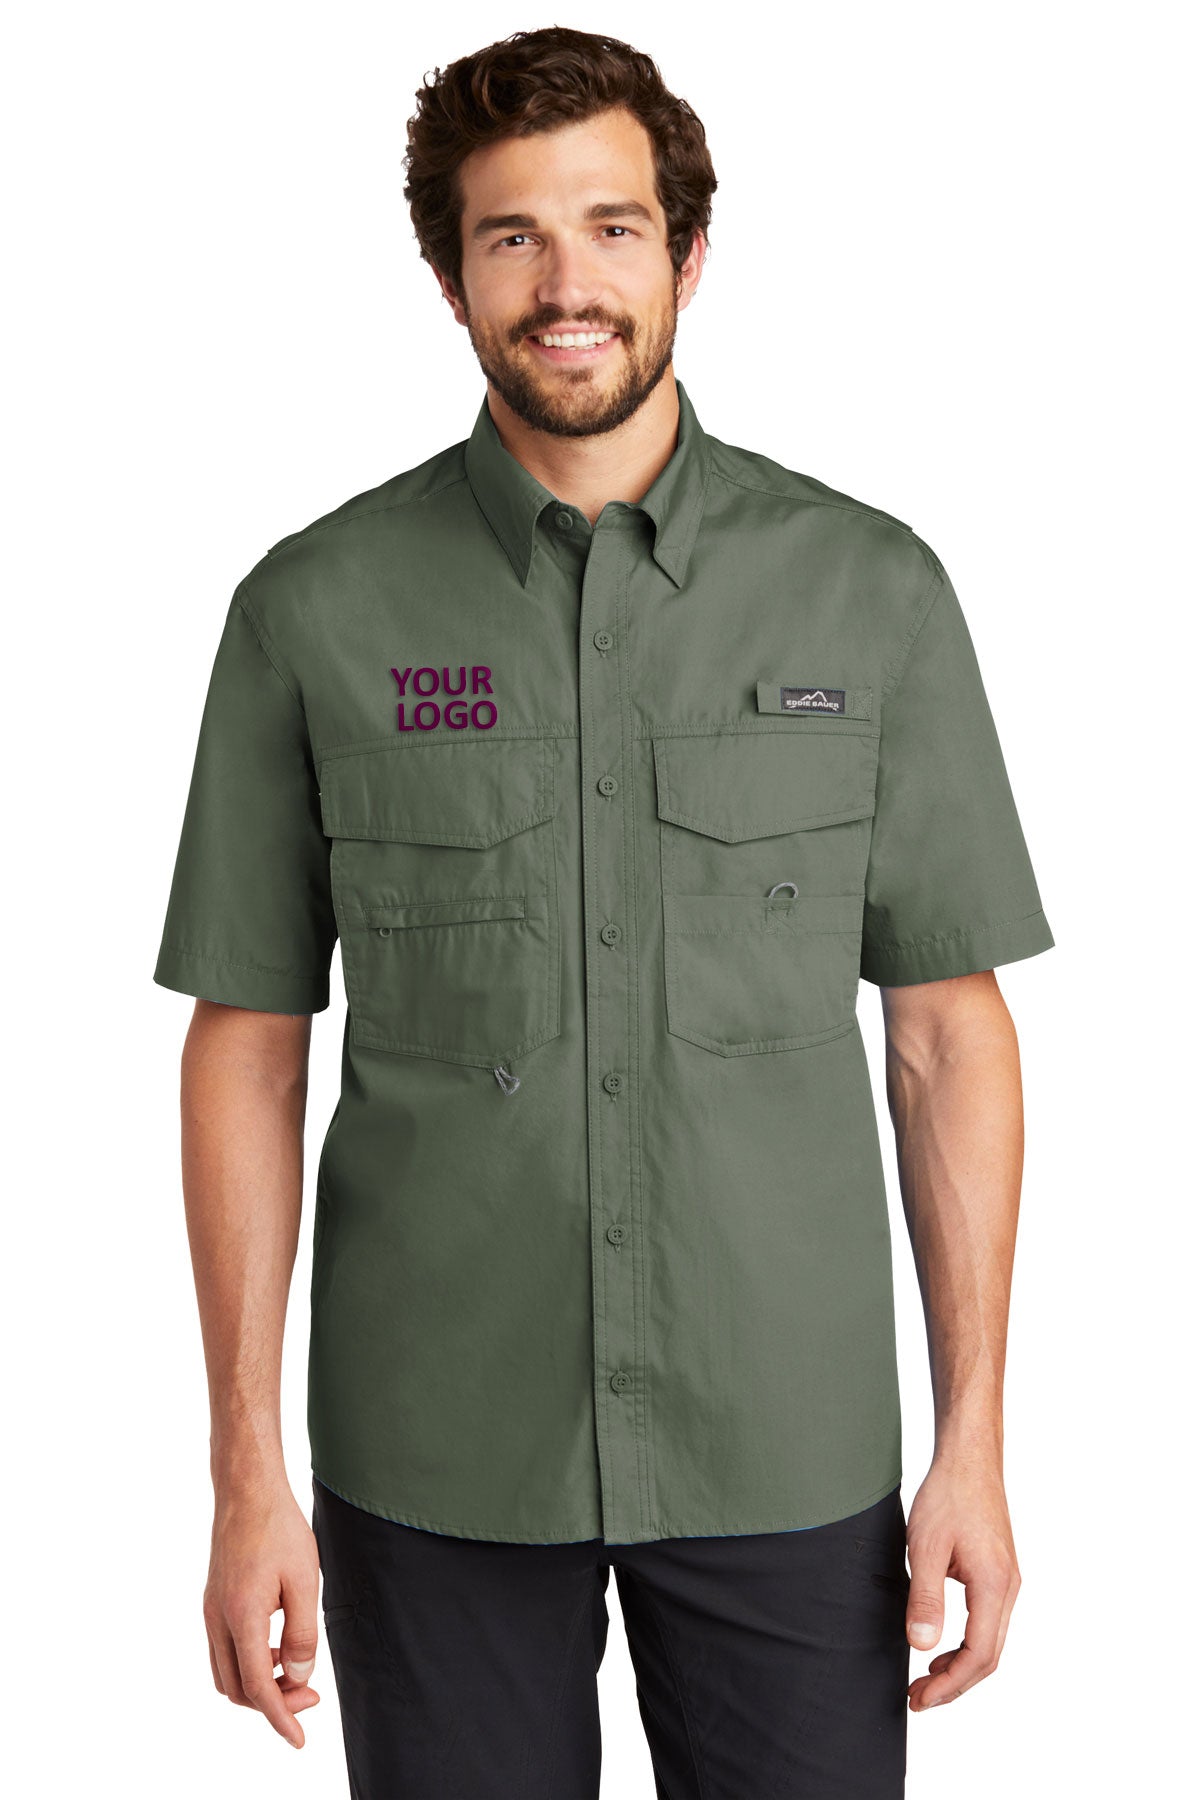 Eddie Bauer Short Sleeve Branded Fishing Shirts, Seagrass Green